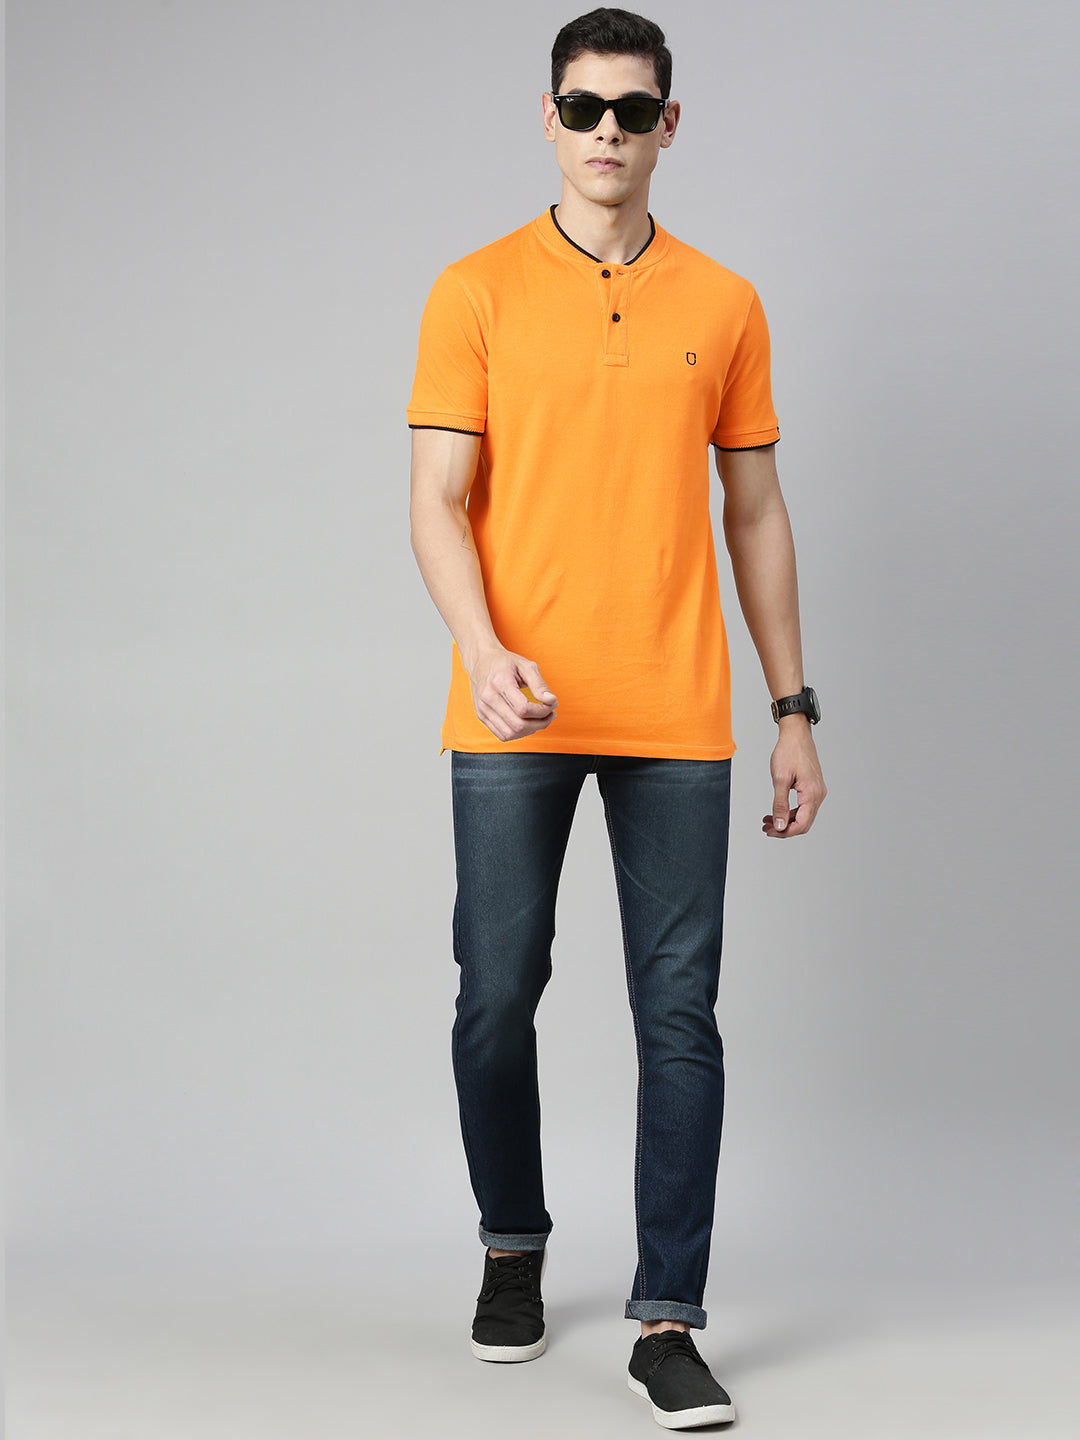 Urbano Fashion Men's Mustard Solid Mandarin Collar Slim Fit Cotton Polo T-Shirt